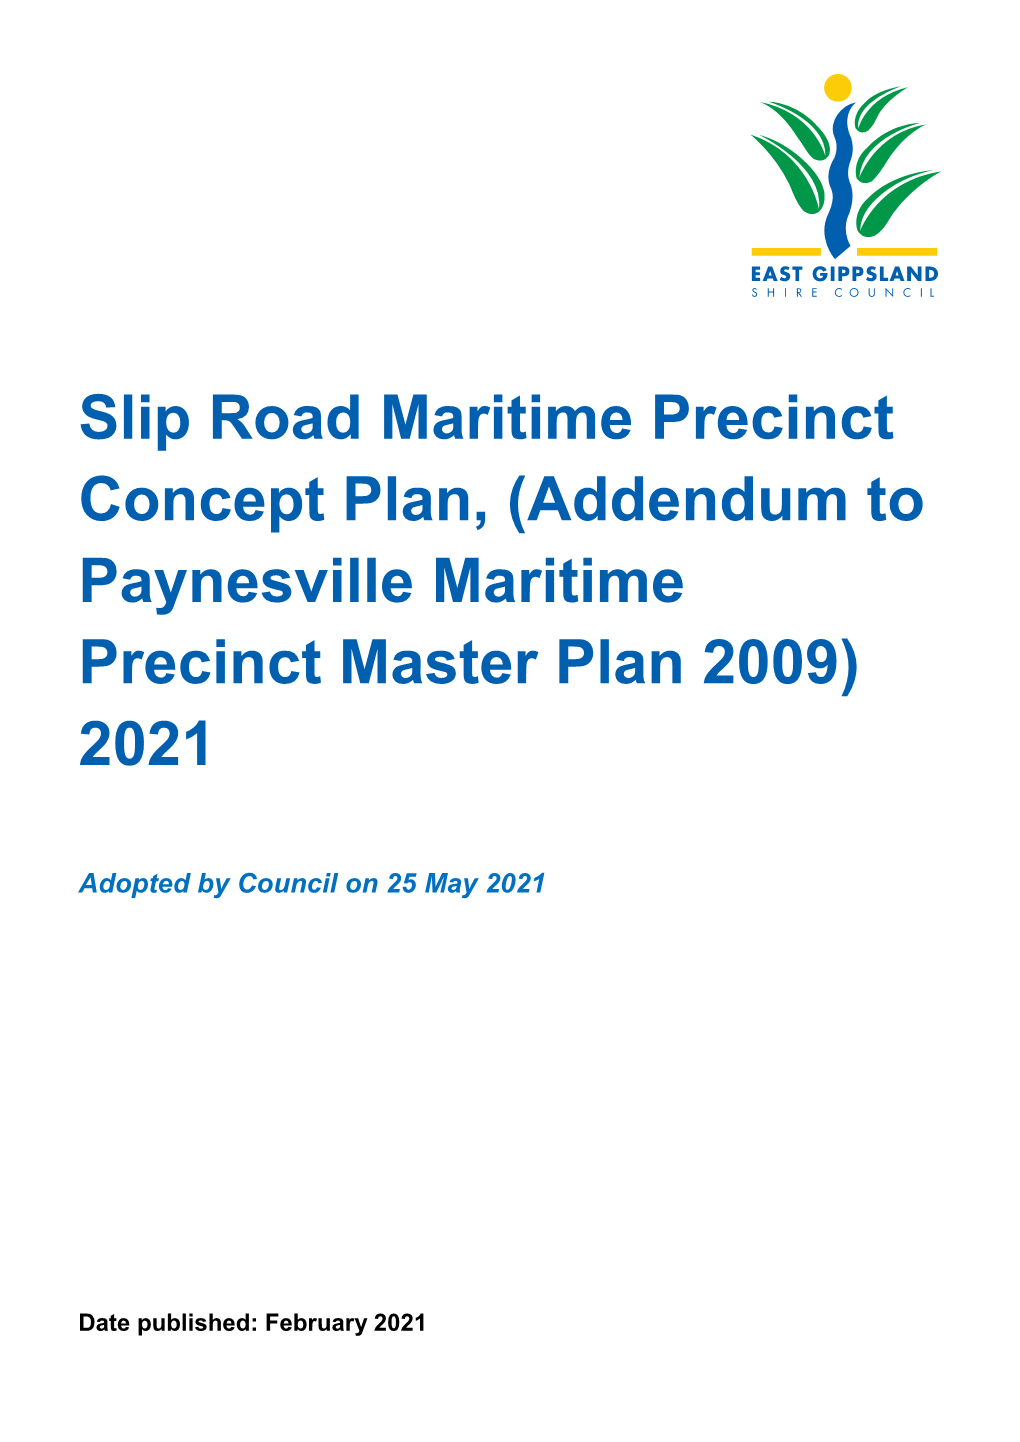 Slip Road Maritime Precinct Concept Plan, (Addendum to Paynesville Maritime Precinct Master Plan 2009) 2021